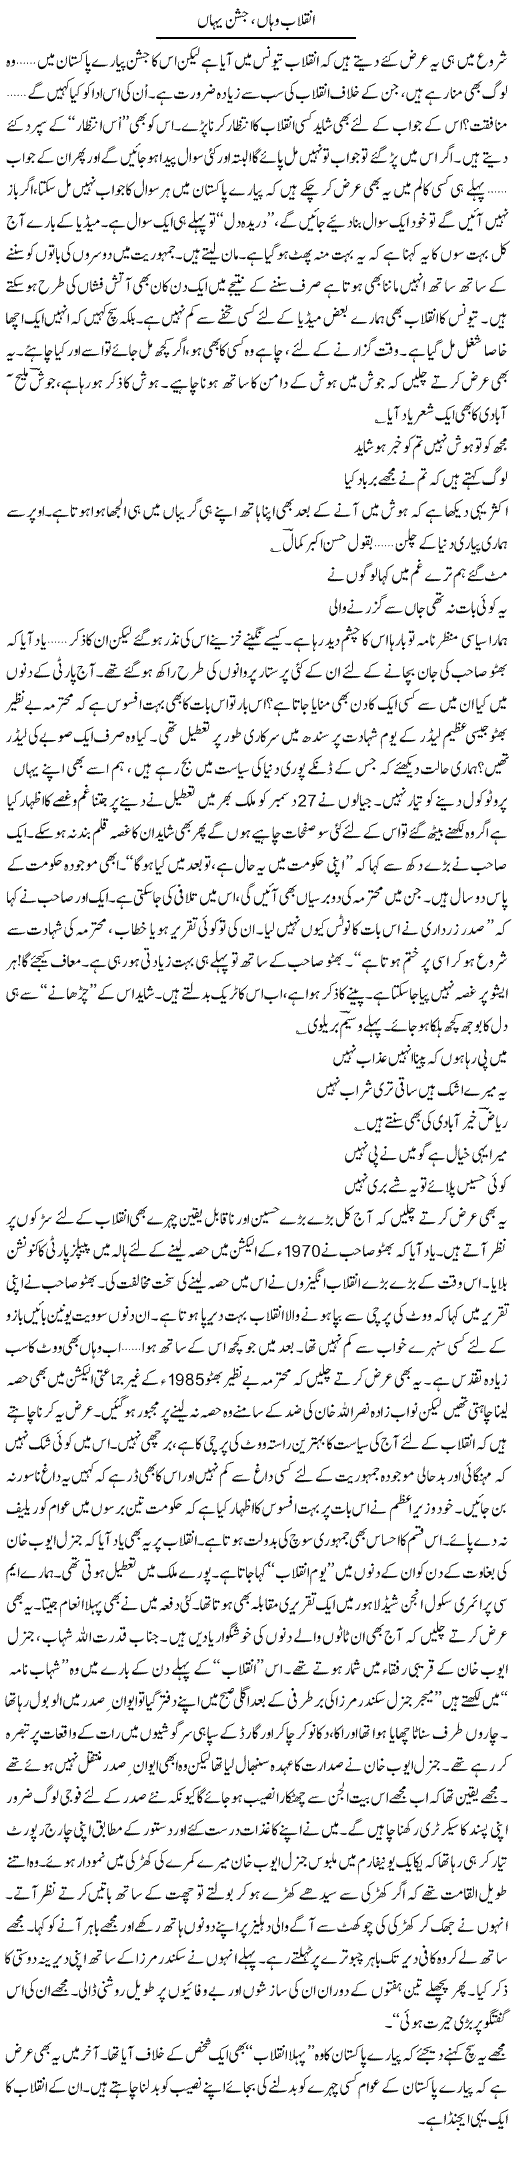 Bhutto Democracy Express Column Ijaz Hafeez 6 February 2011